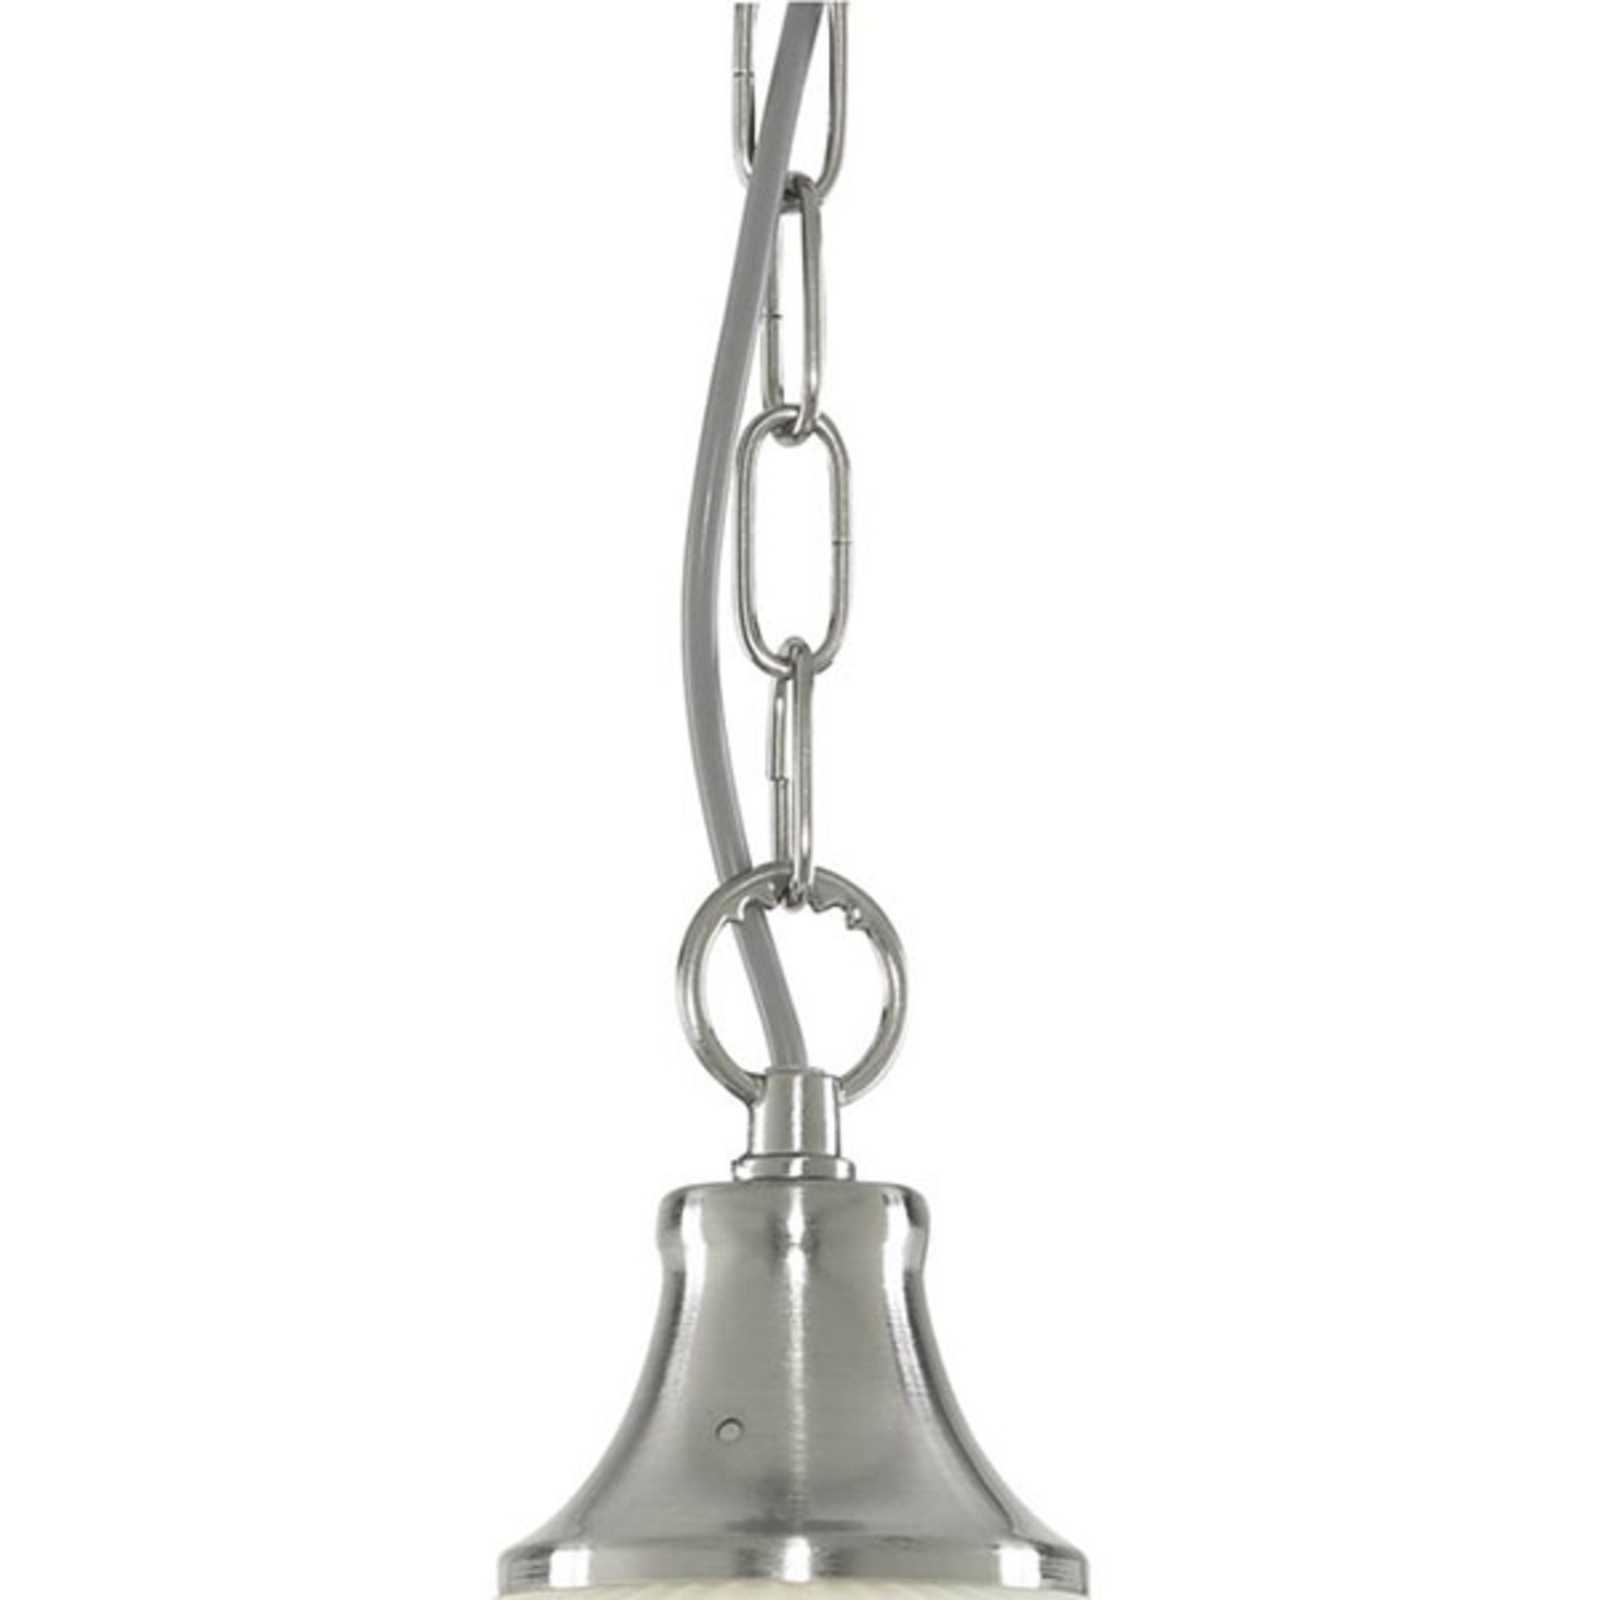 American Diner srebrna satenska viseća lampa s jednom lampom